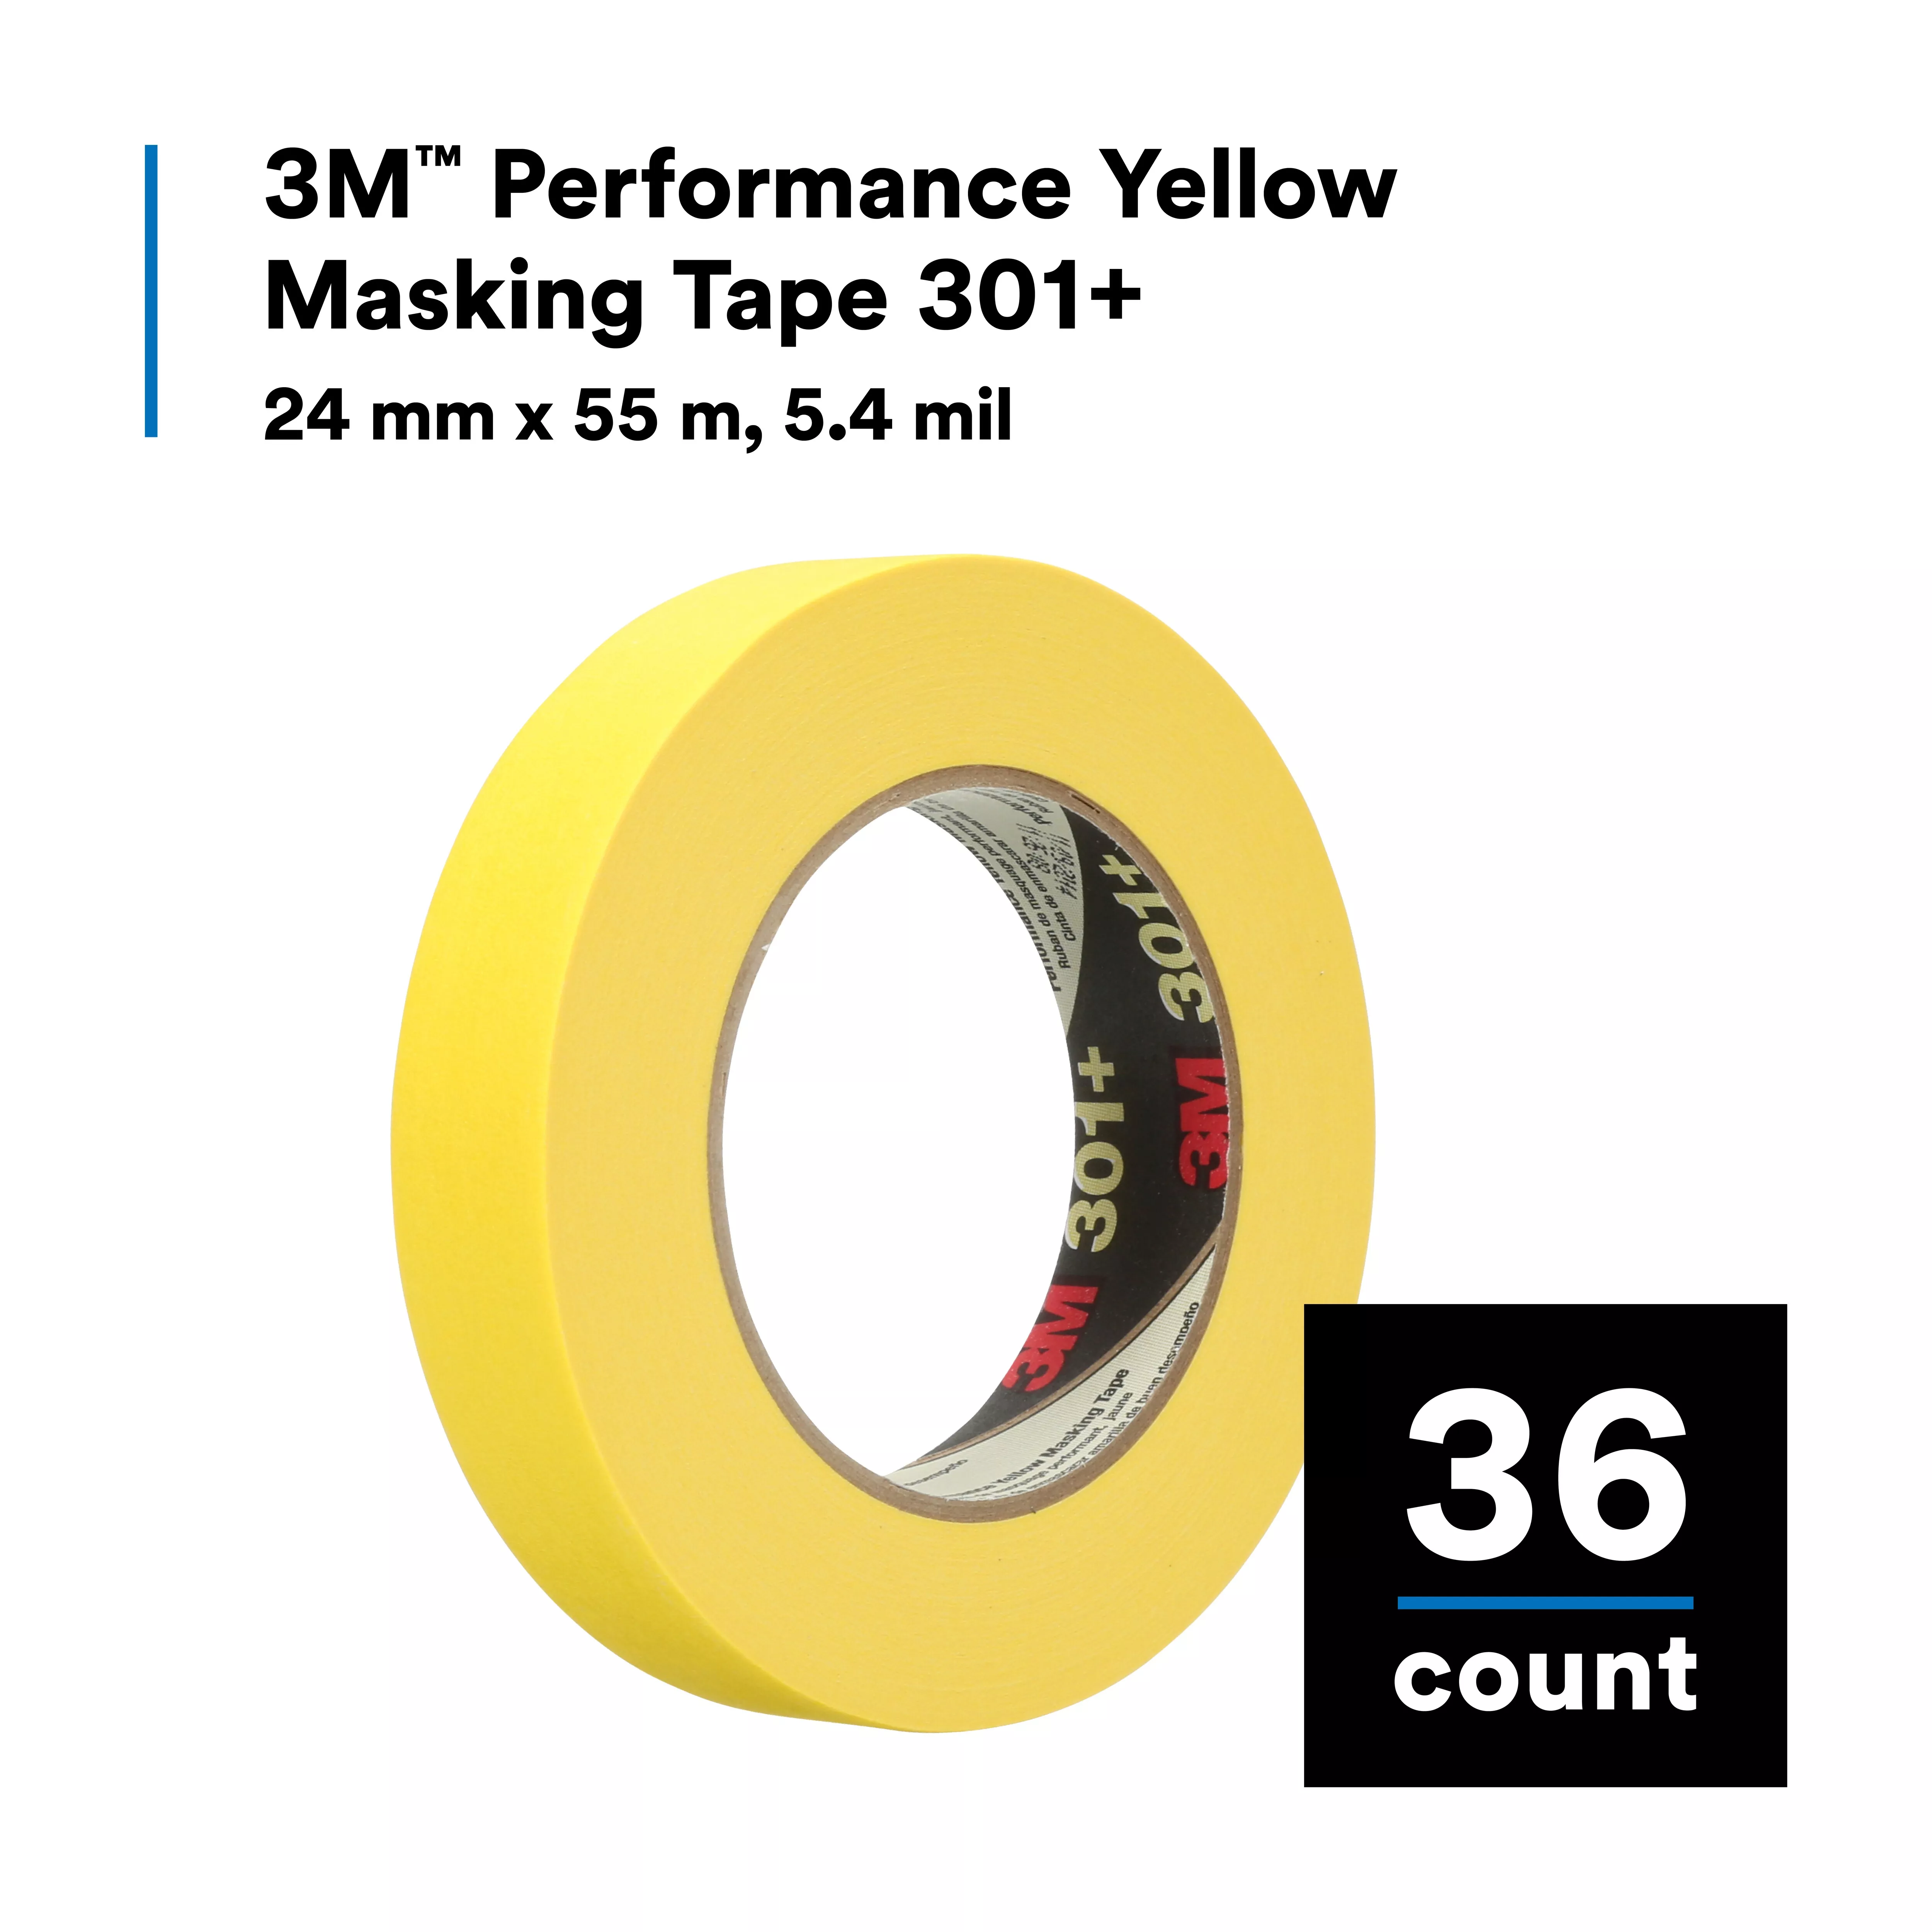 SKU 7000148420 | 3M™ Performance Yellow Masking Tape 301+